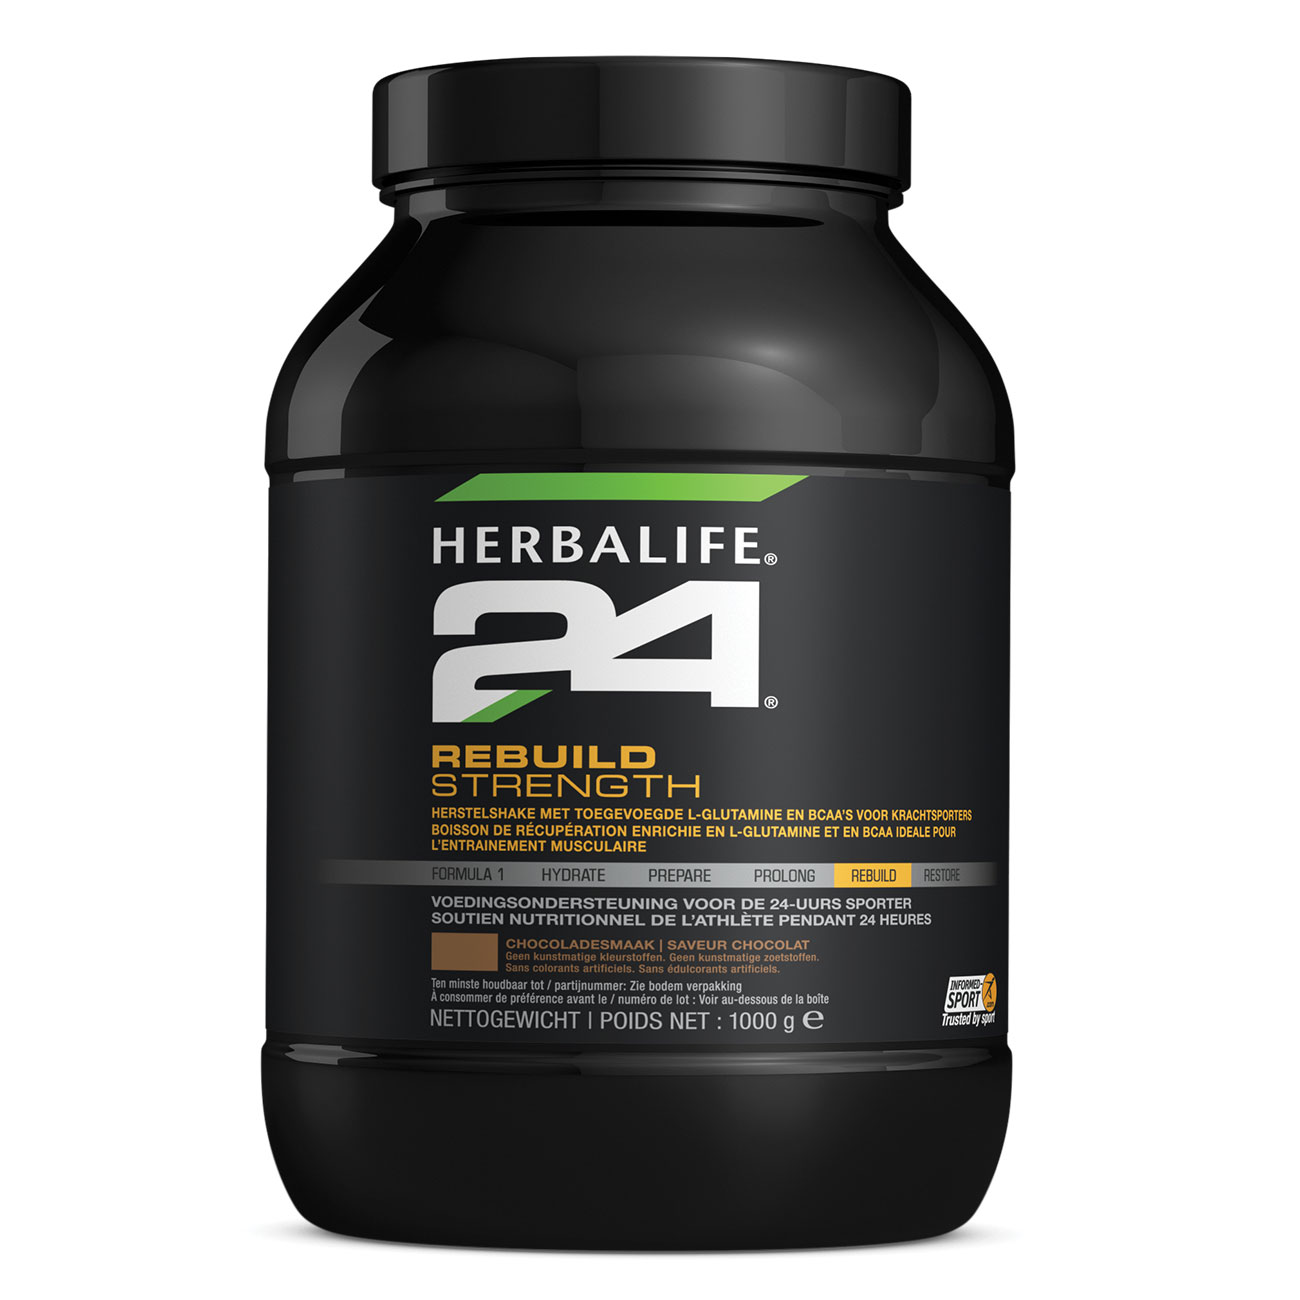 Herbalife24® Rebuild Strength proteïne shake chocolade product shot